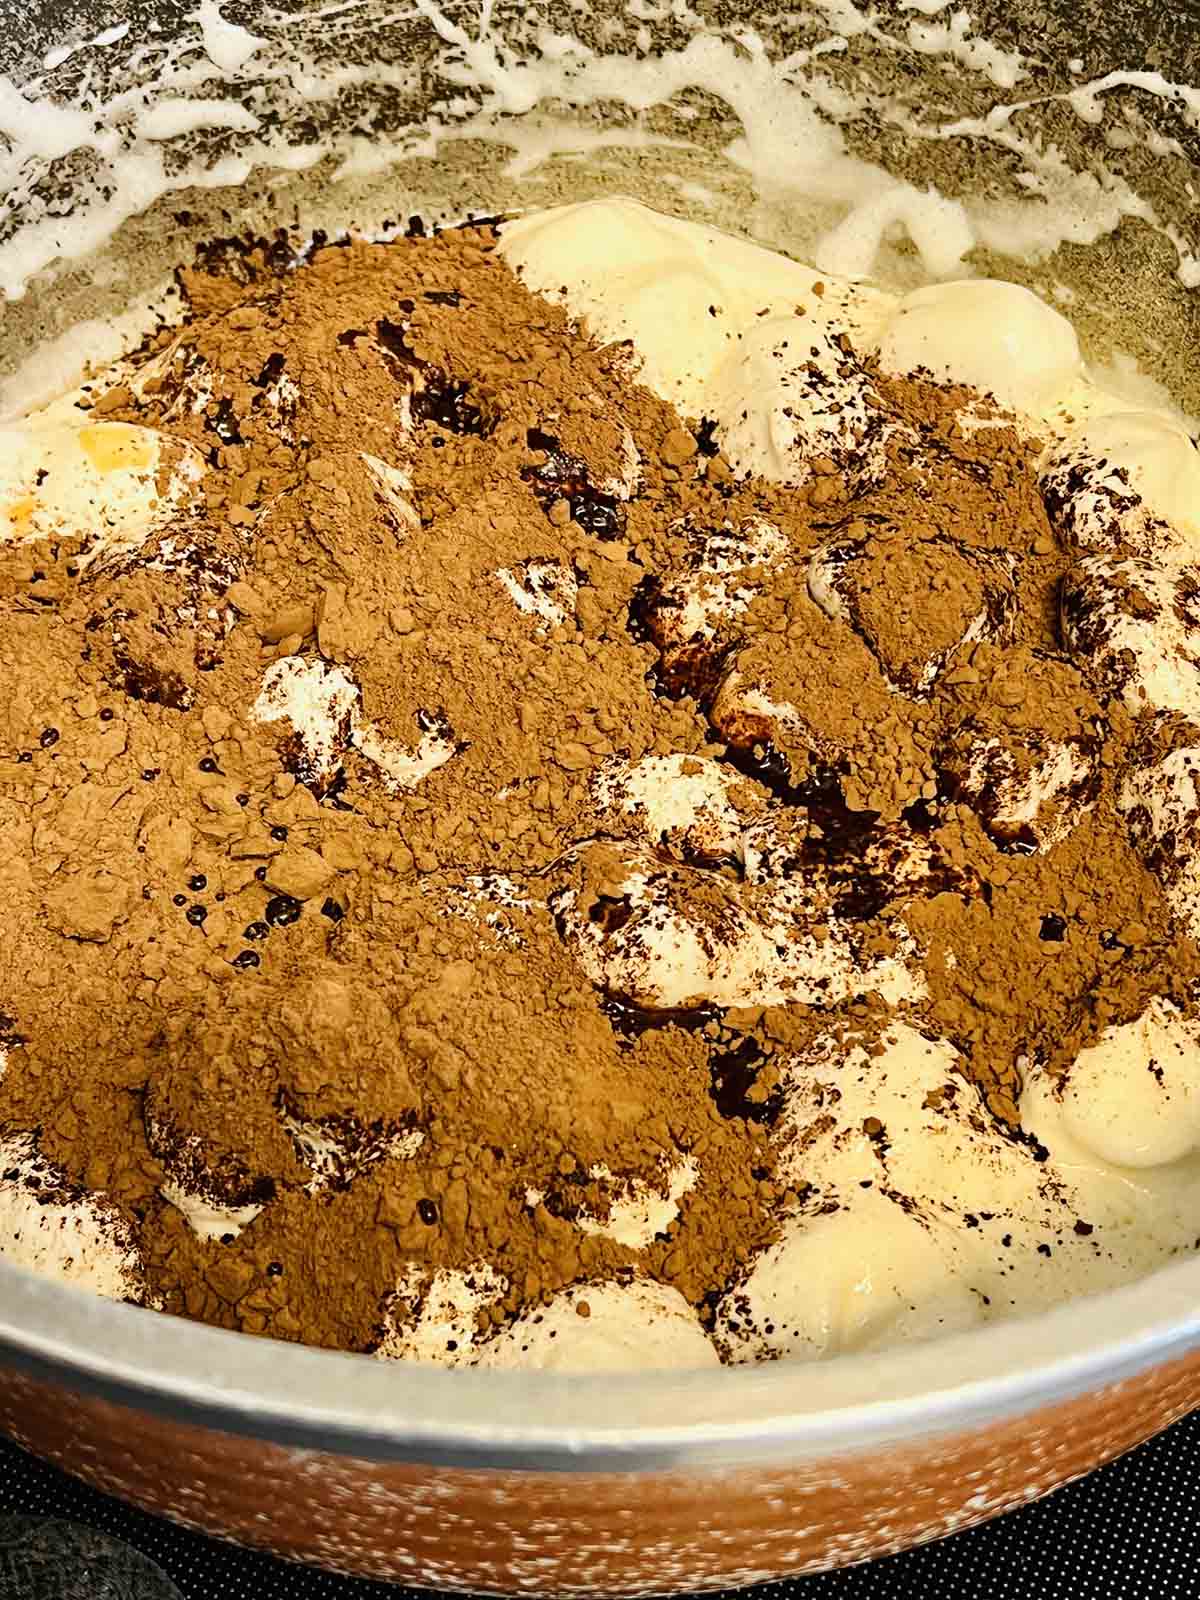 Cocoa powder over marshmallows in a pot.